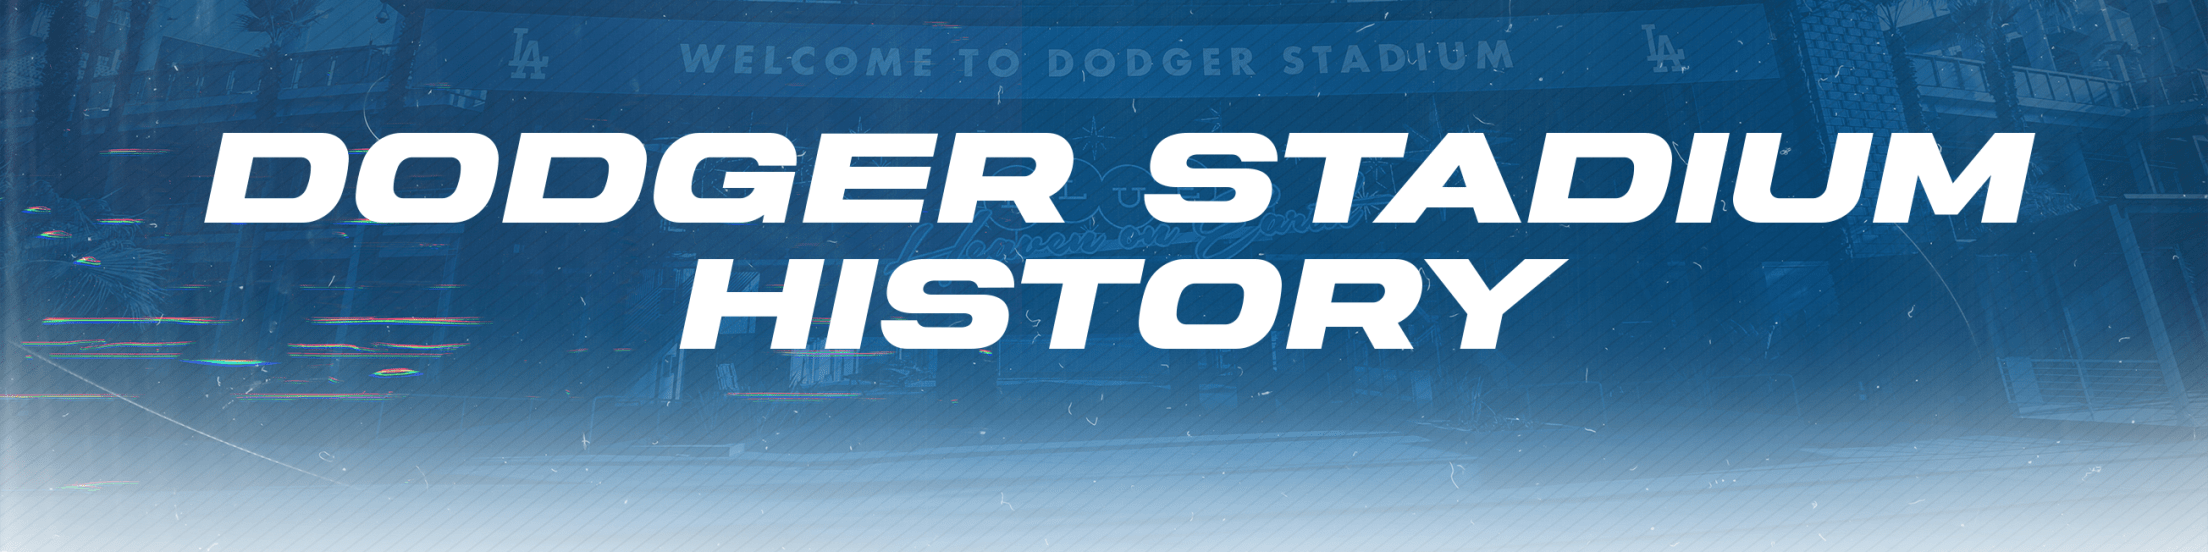 Dodger Stadium History | Los Angeles Dodgers